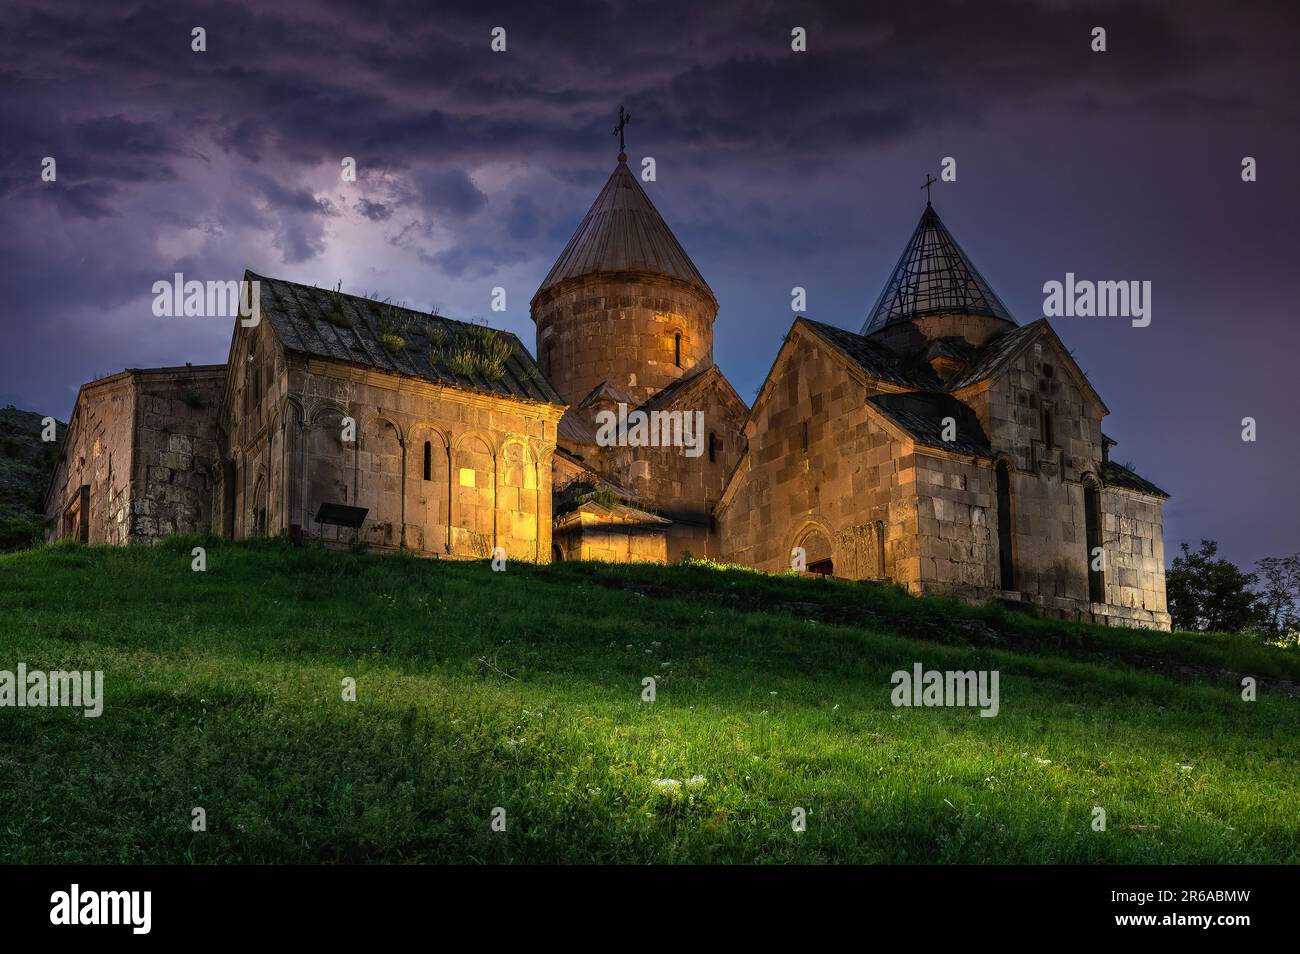 Goshavank Monastery in Gosh Village, Tavush Province, Armenia Stock Photo